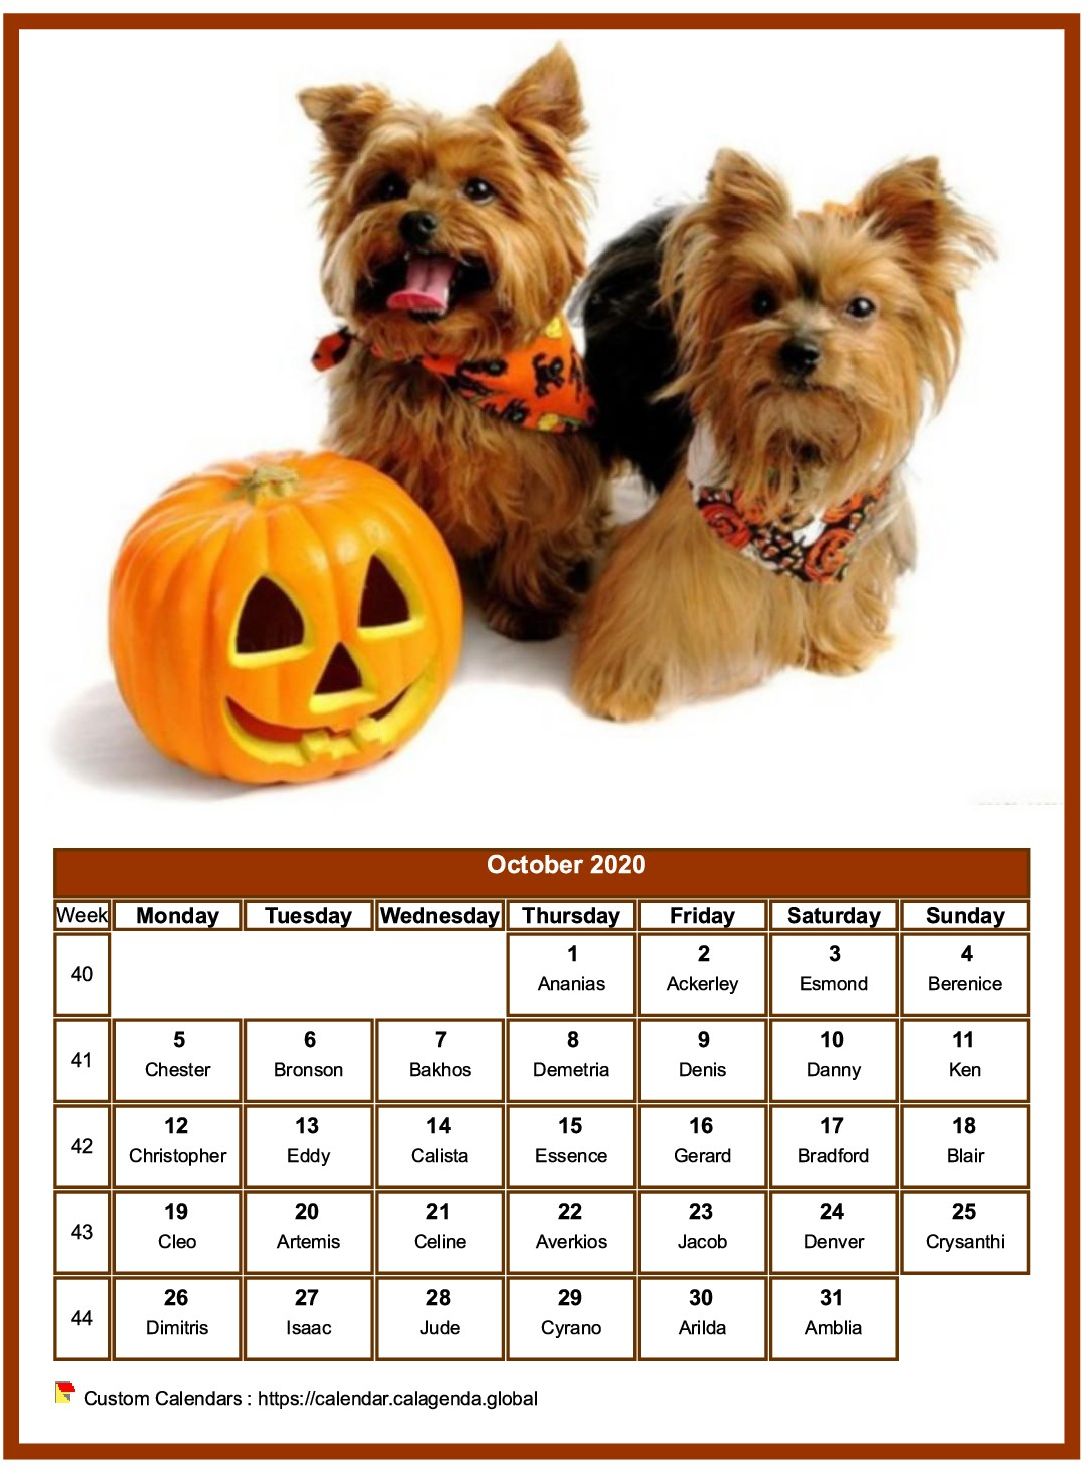 Calendar October 2020 dogs